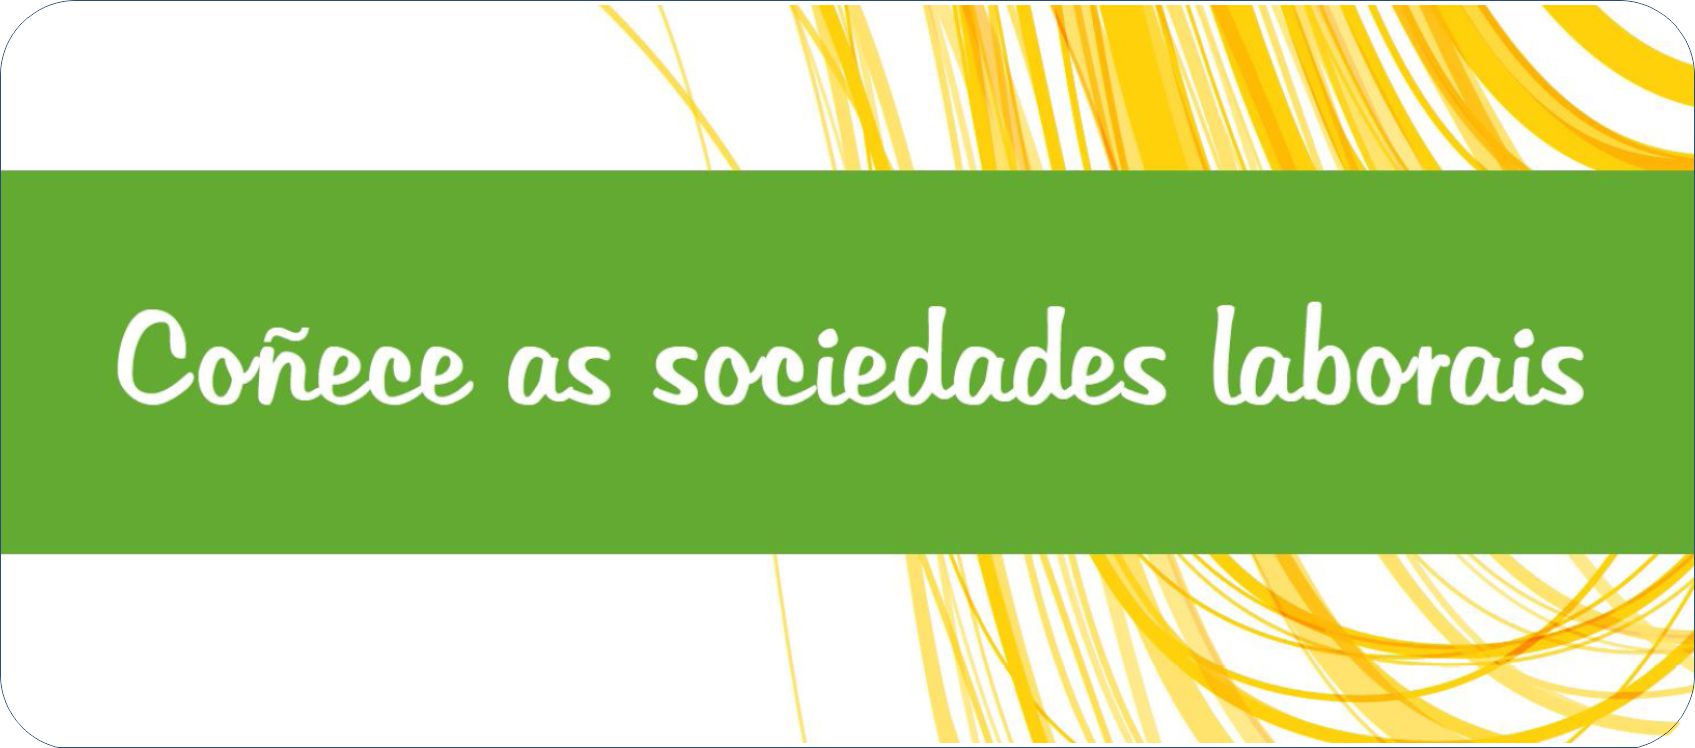 Acceso a la publicación Coñece as sociedades laborais (en gallego)